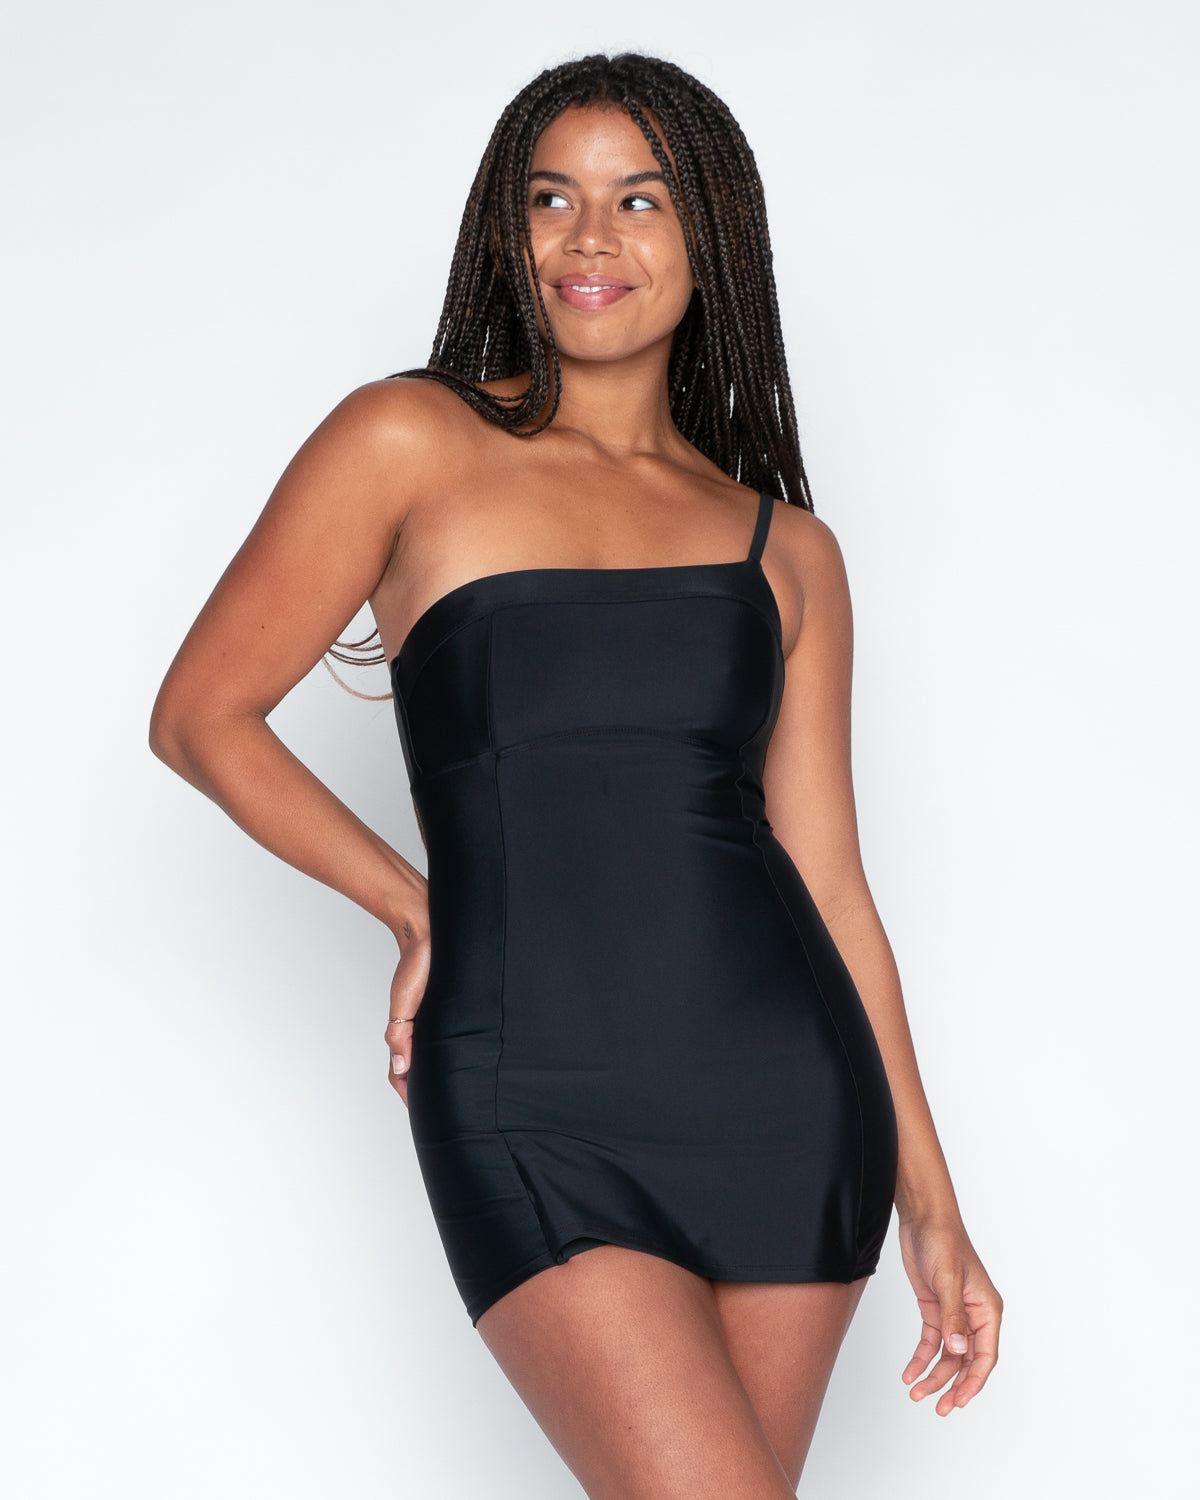 Buy Women's Cotton Black One Piece Dresses | Knee Length Dress | Woman's  Short Dress (S, 2) at Amazon.in